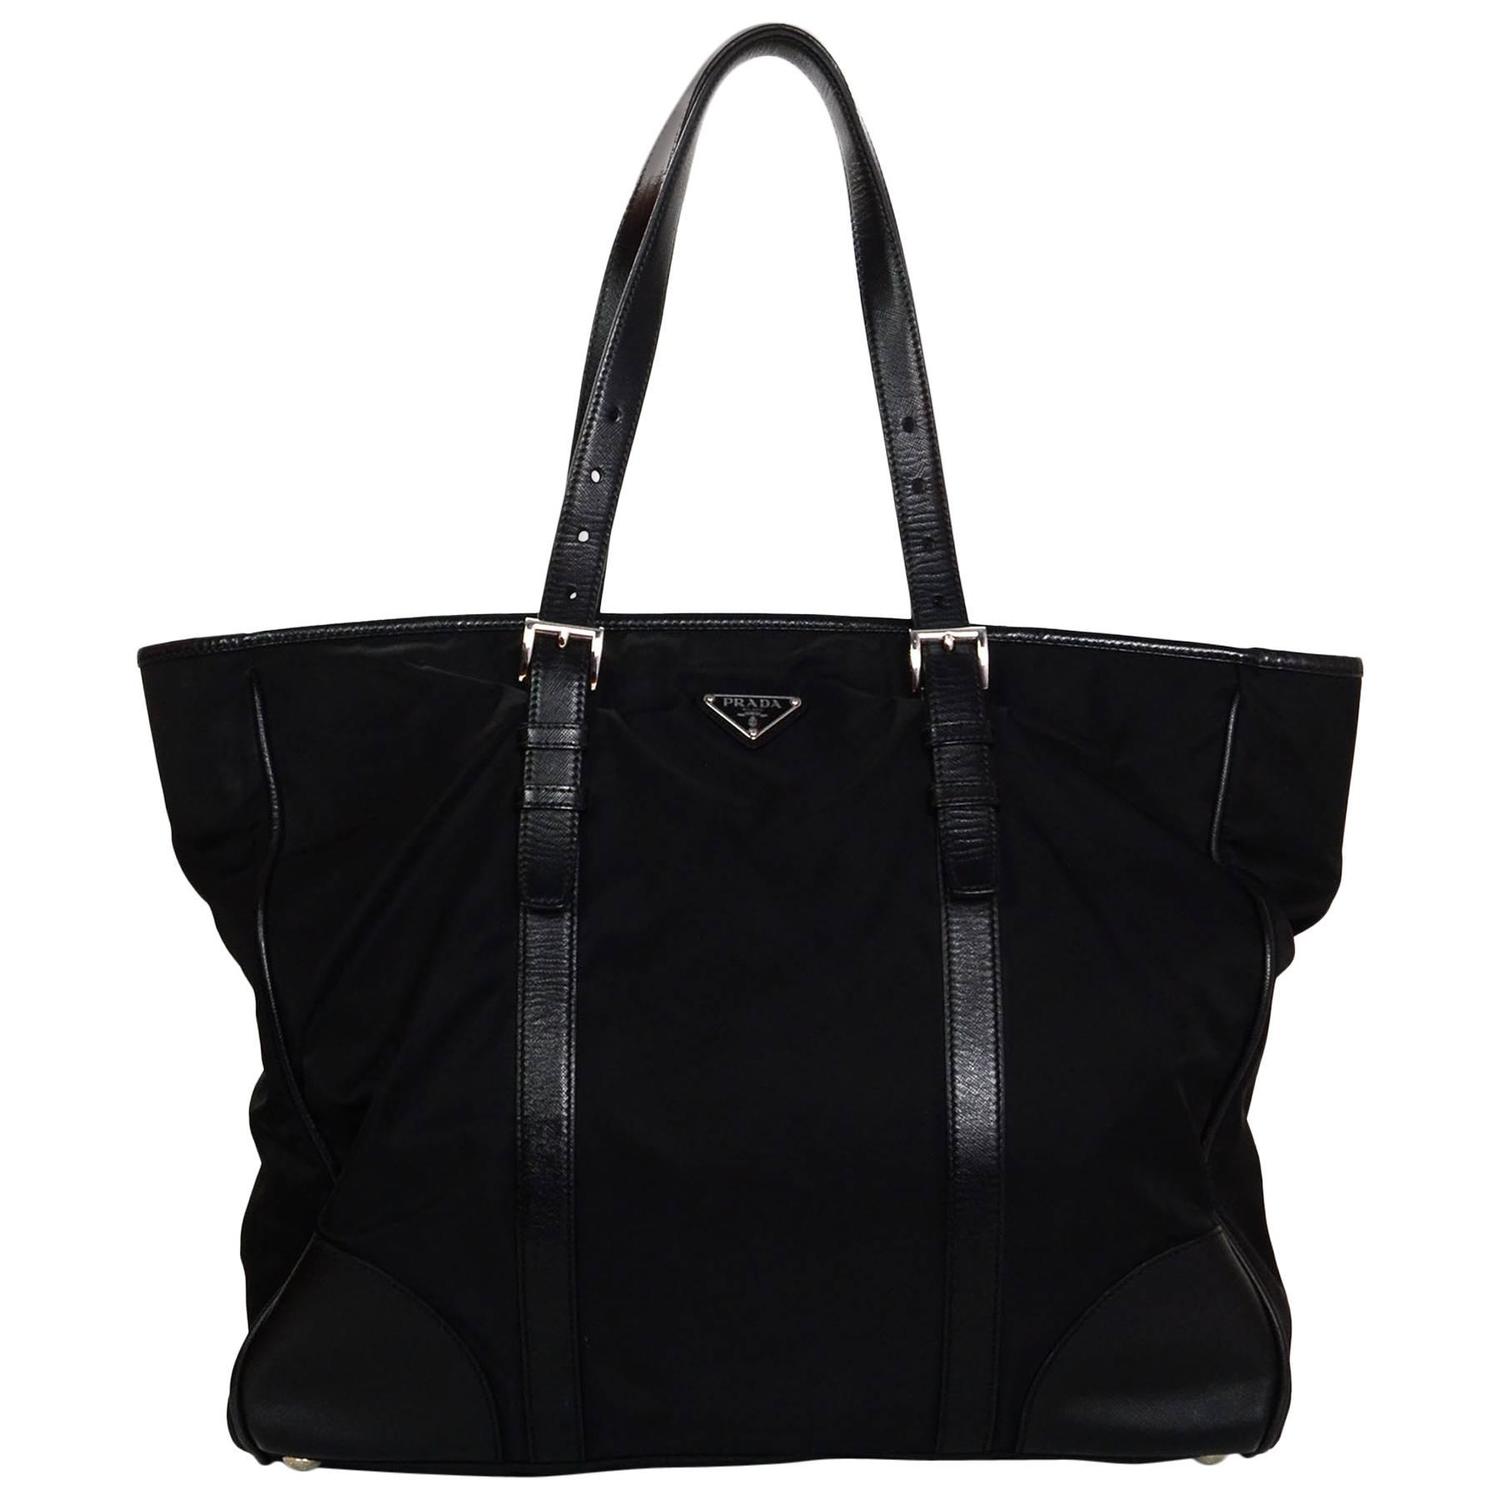 Prada Black Tessuto Nylon Tote Bag w/ Leather Trim For Sale at 1stdibs